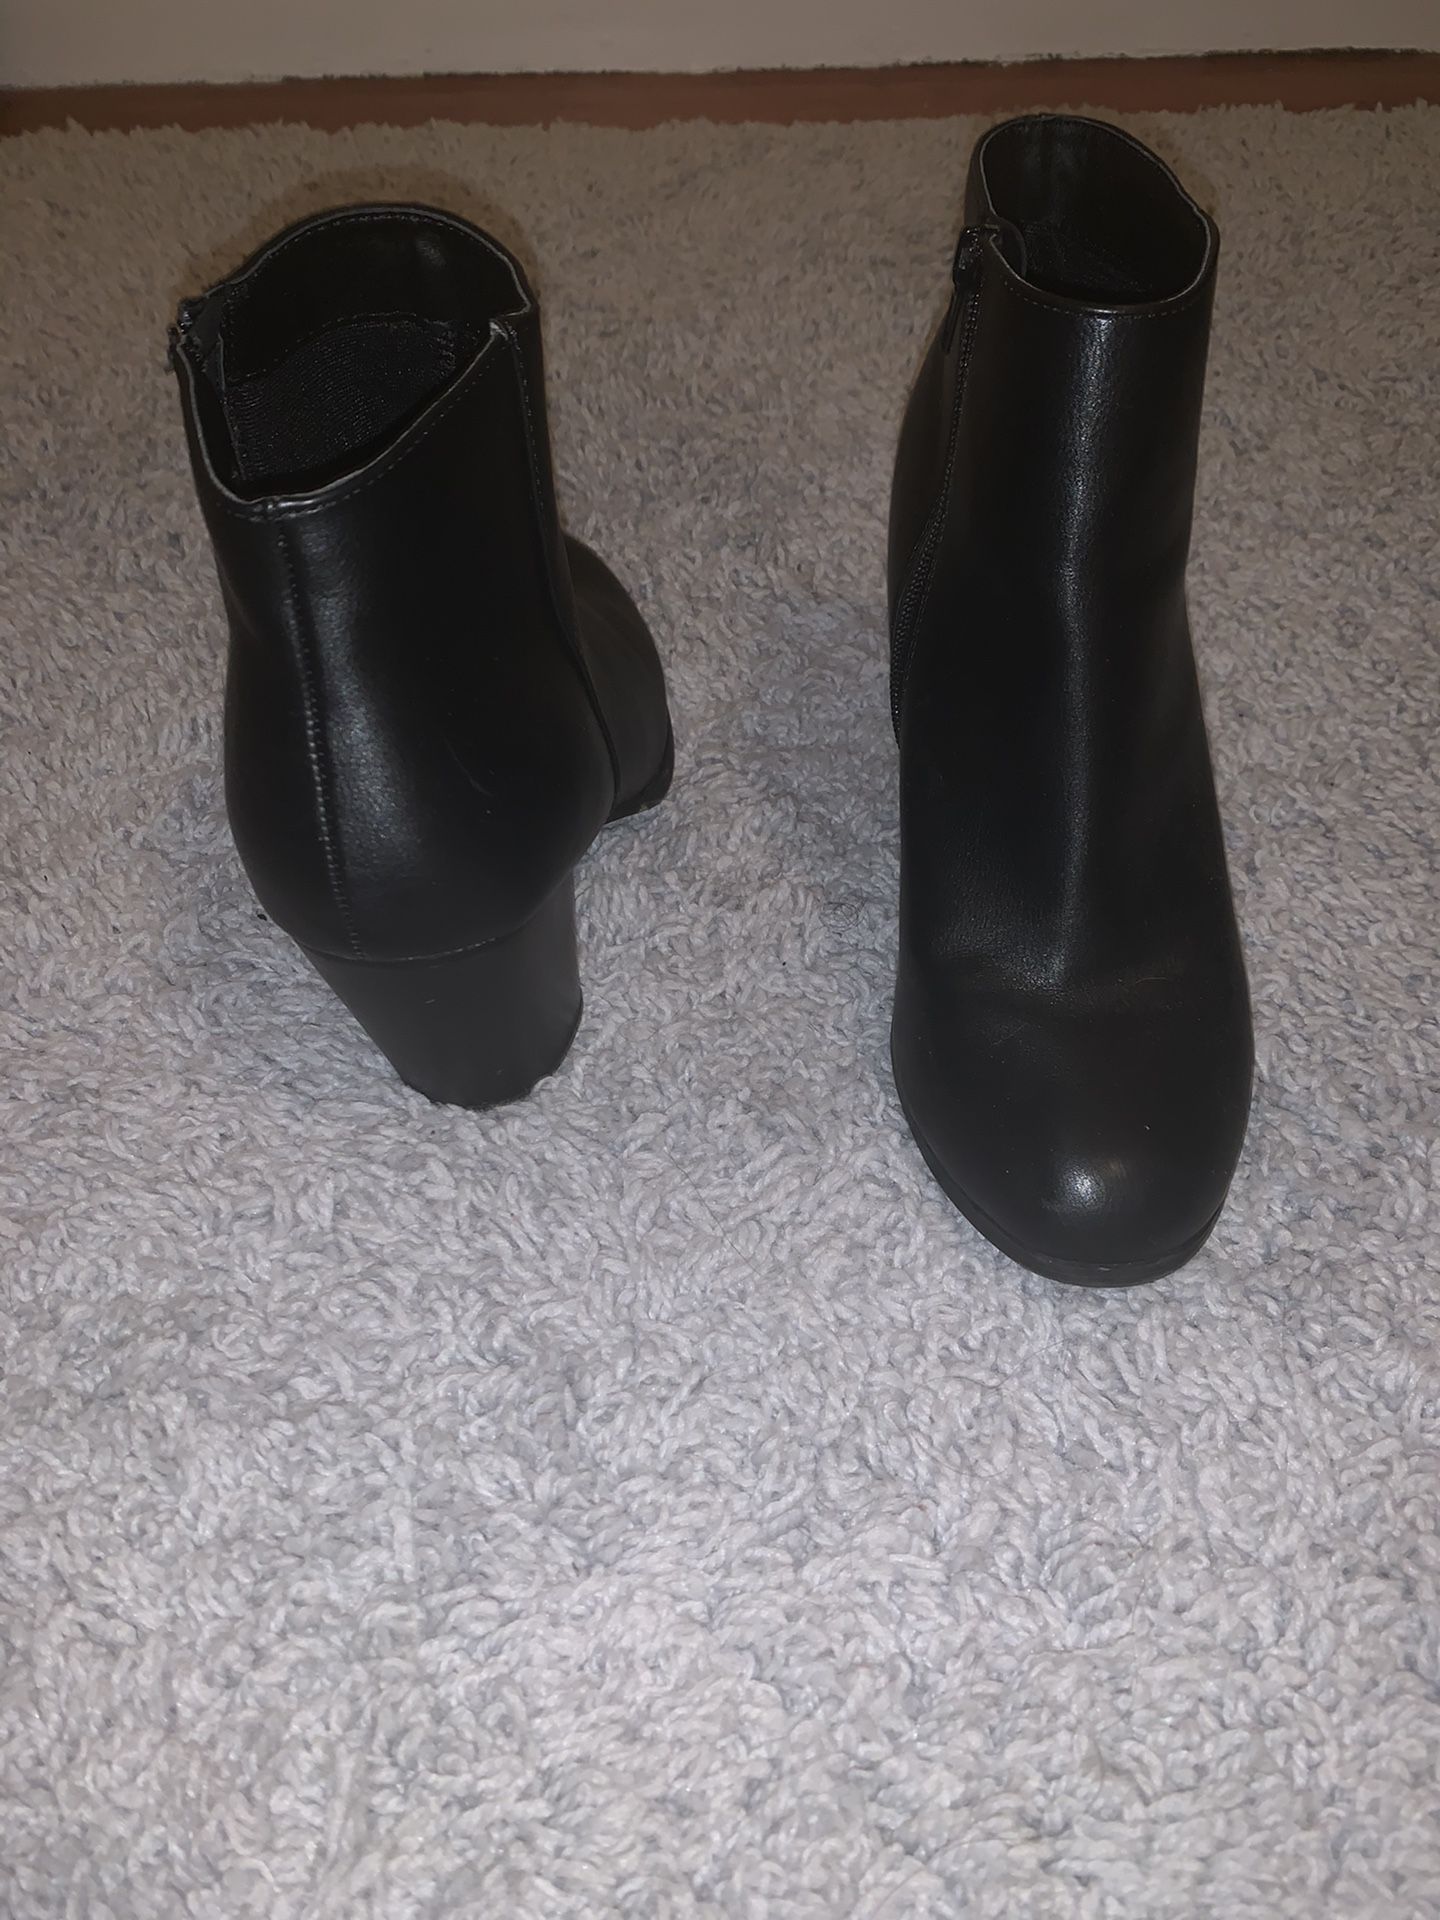 Women’s size 9 - high heel block boots